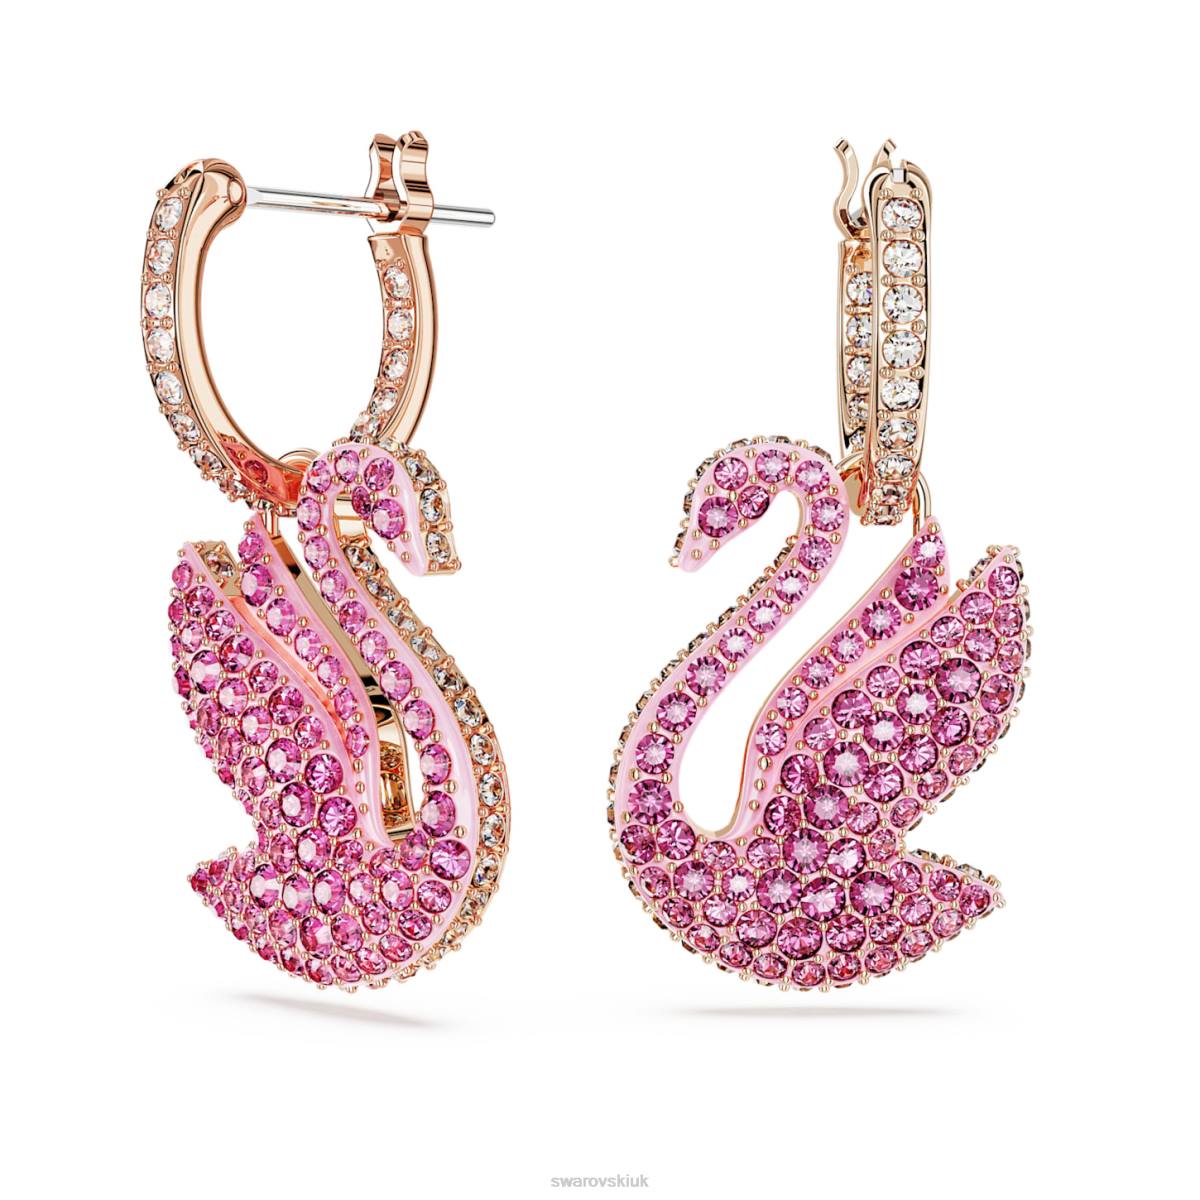 Jewelry Swarovski Iconic Swan drop earrings Swan, Pink, Rose gold-tone plated 48JX812